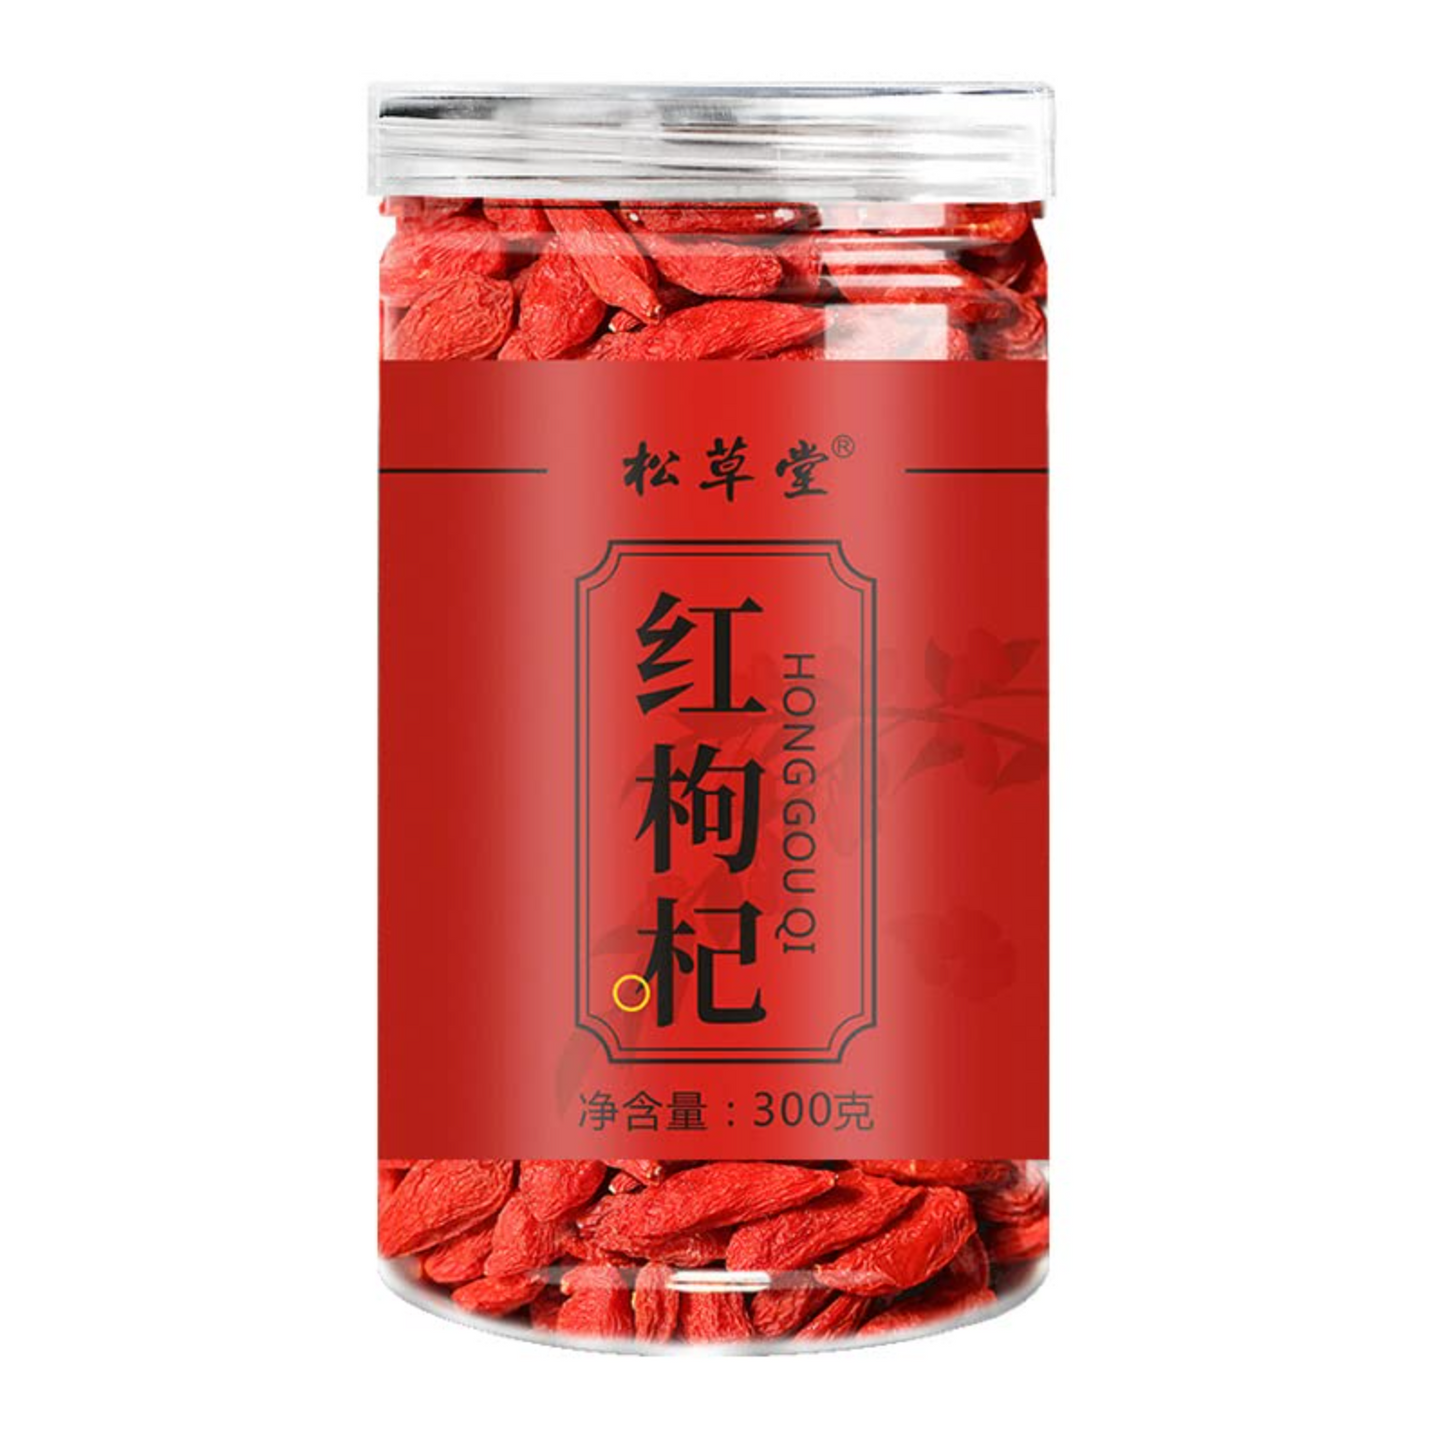 Goji Berries 300g Goji Canned 10.58oz Goji Berries Herbal Tea with Black Goji Gui Yuan Red Date 枸杞子300g罐装